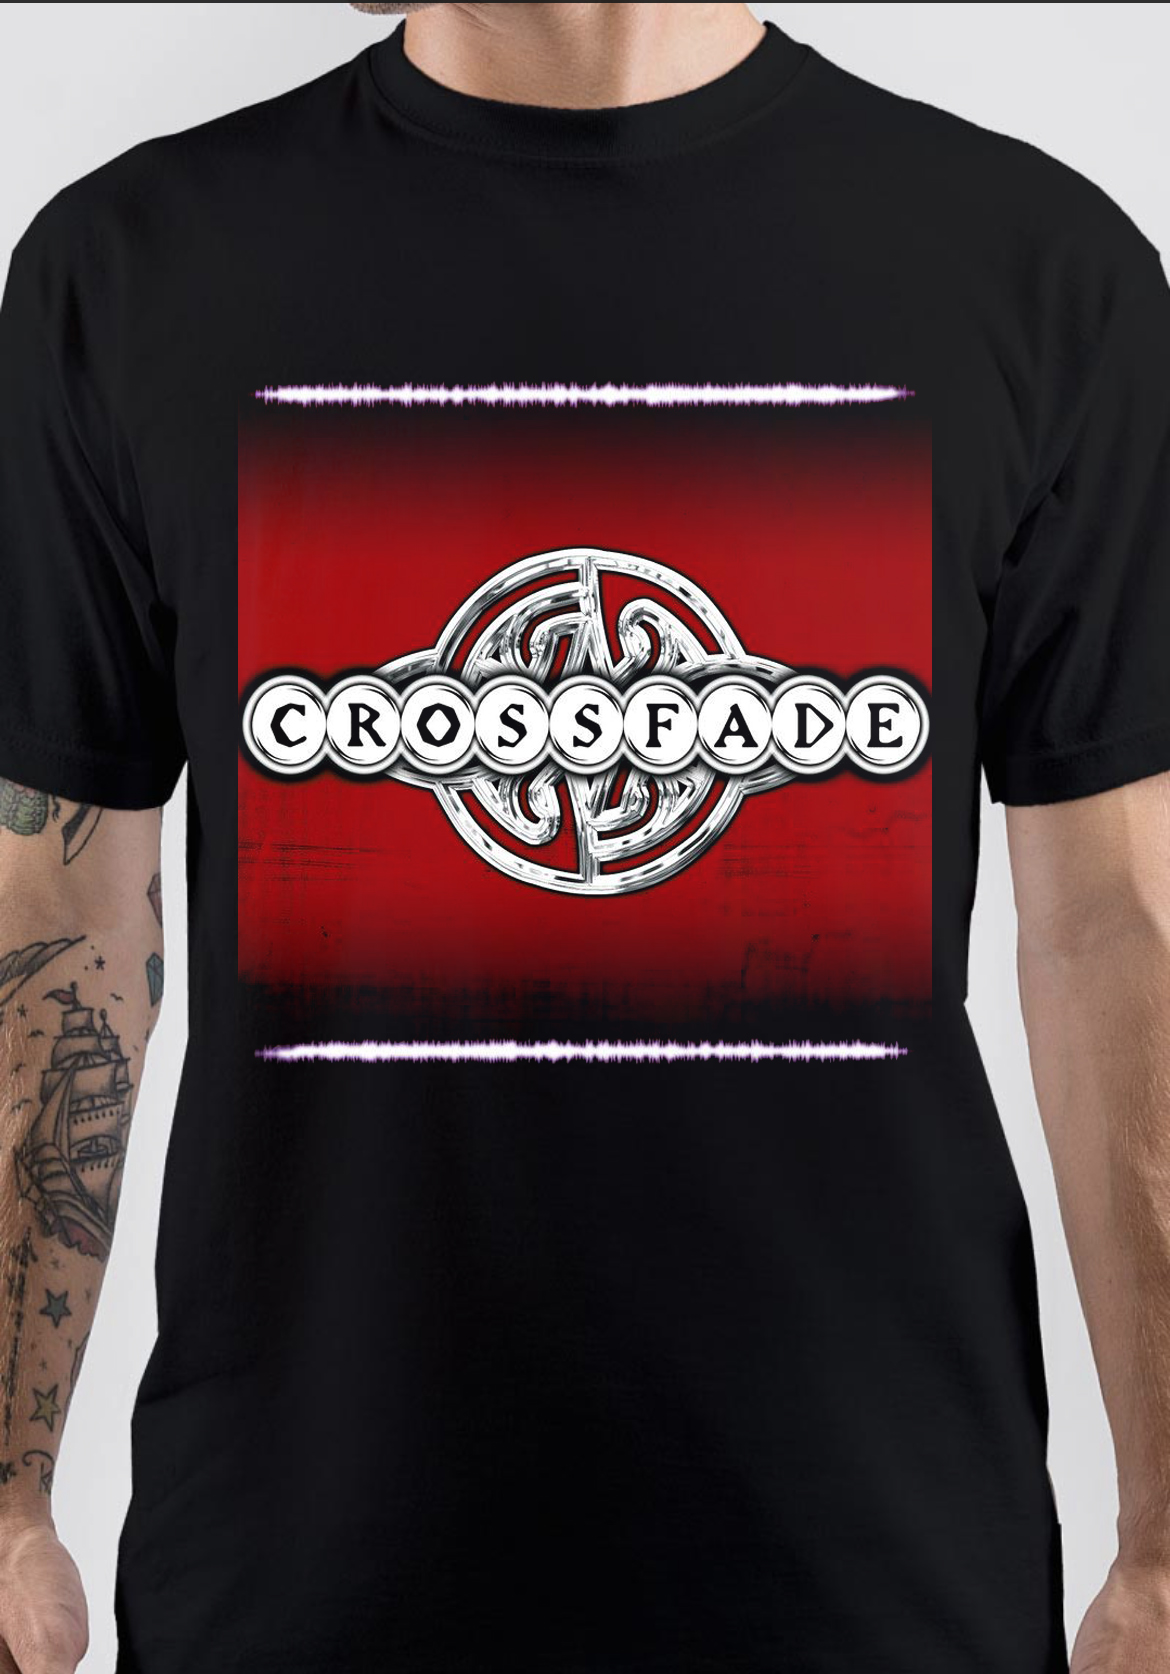 Crossfade T-Shirt And Merchandise